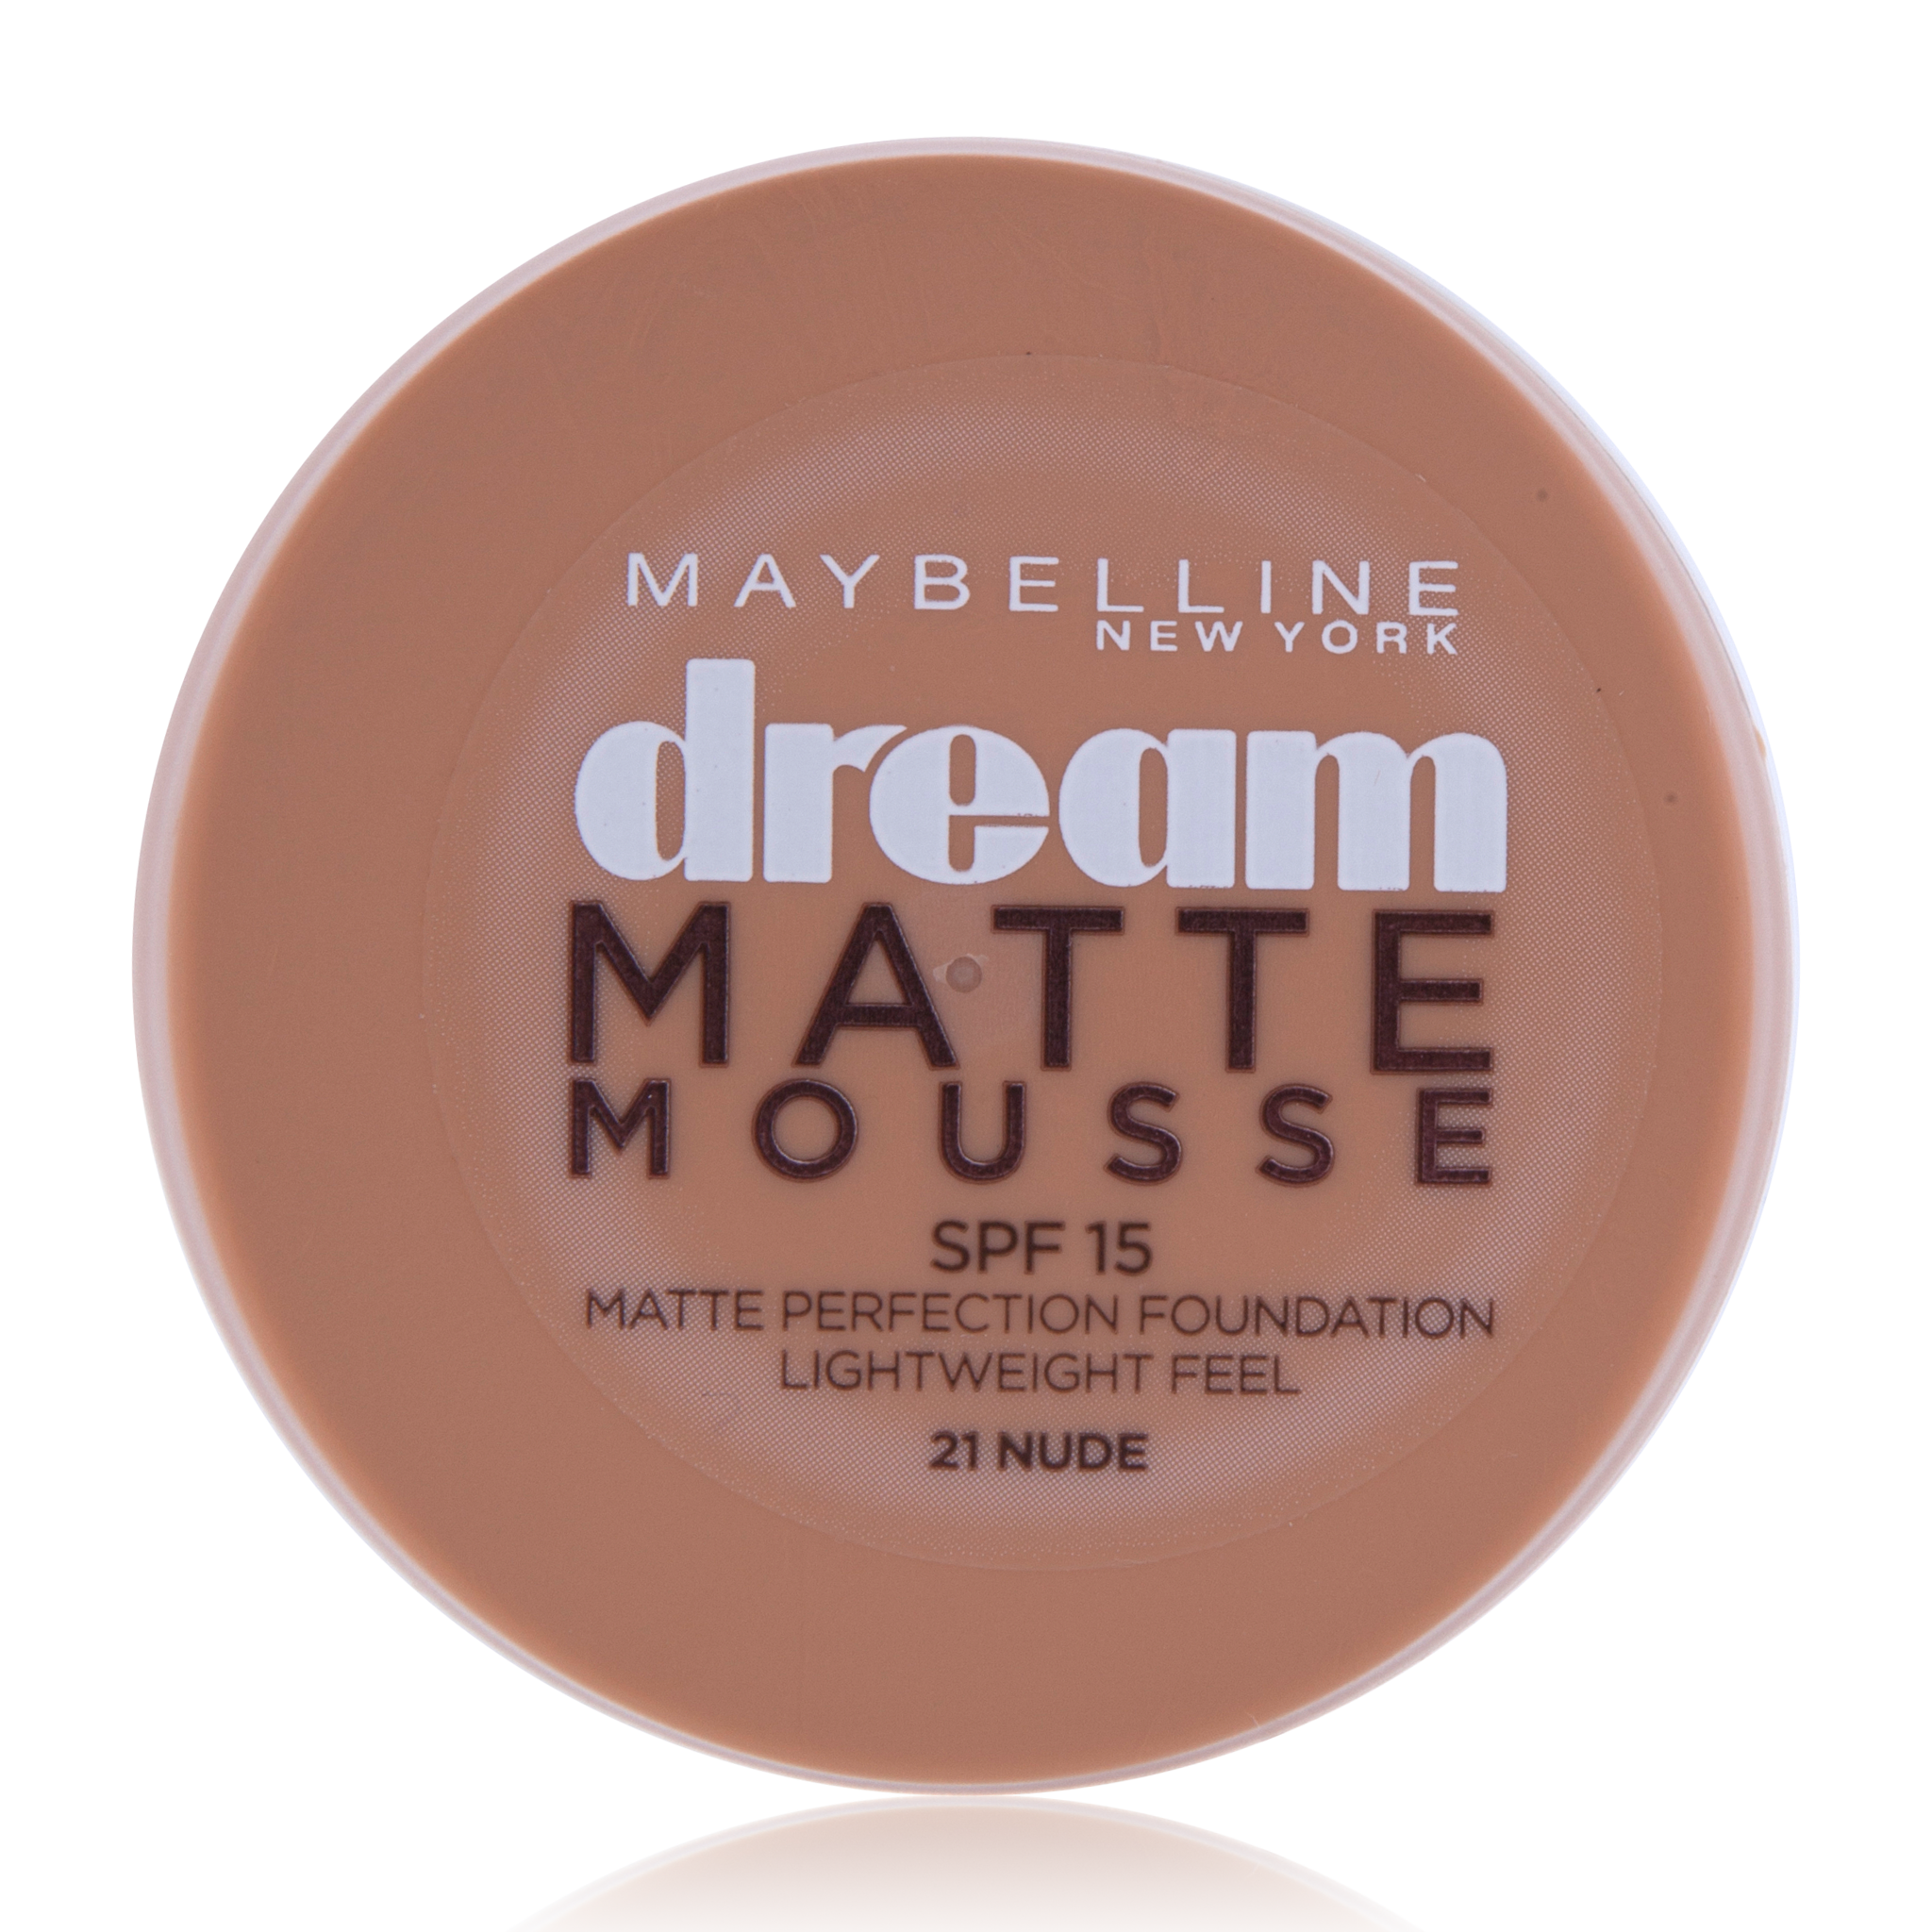 Maybelline Dream Matte Mousse Mattifying Foundation + Primer - 21 nude - Matterende Foundation met Medium Dekking - 18 ml